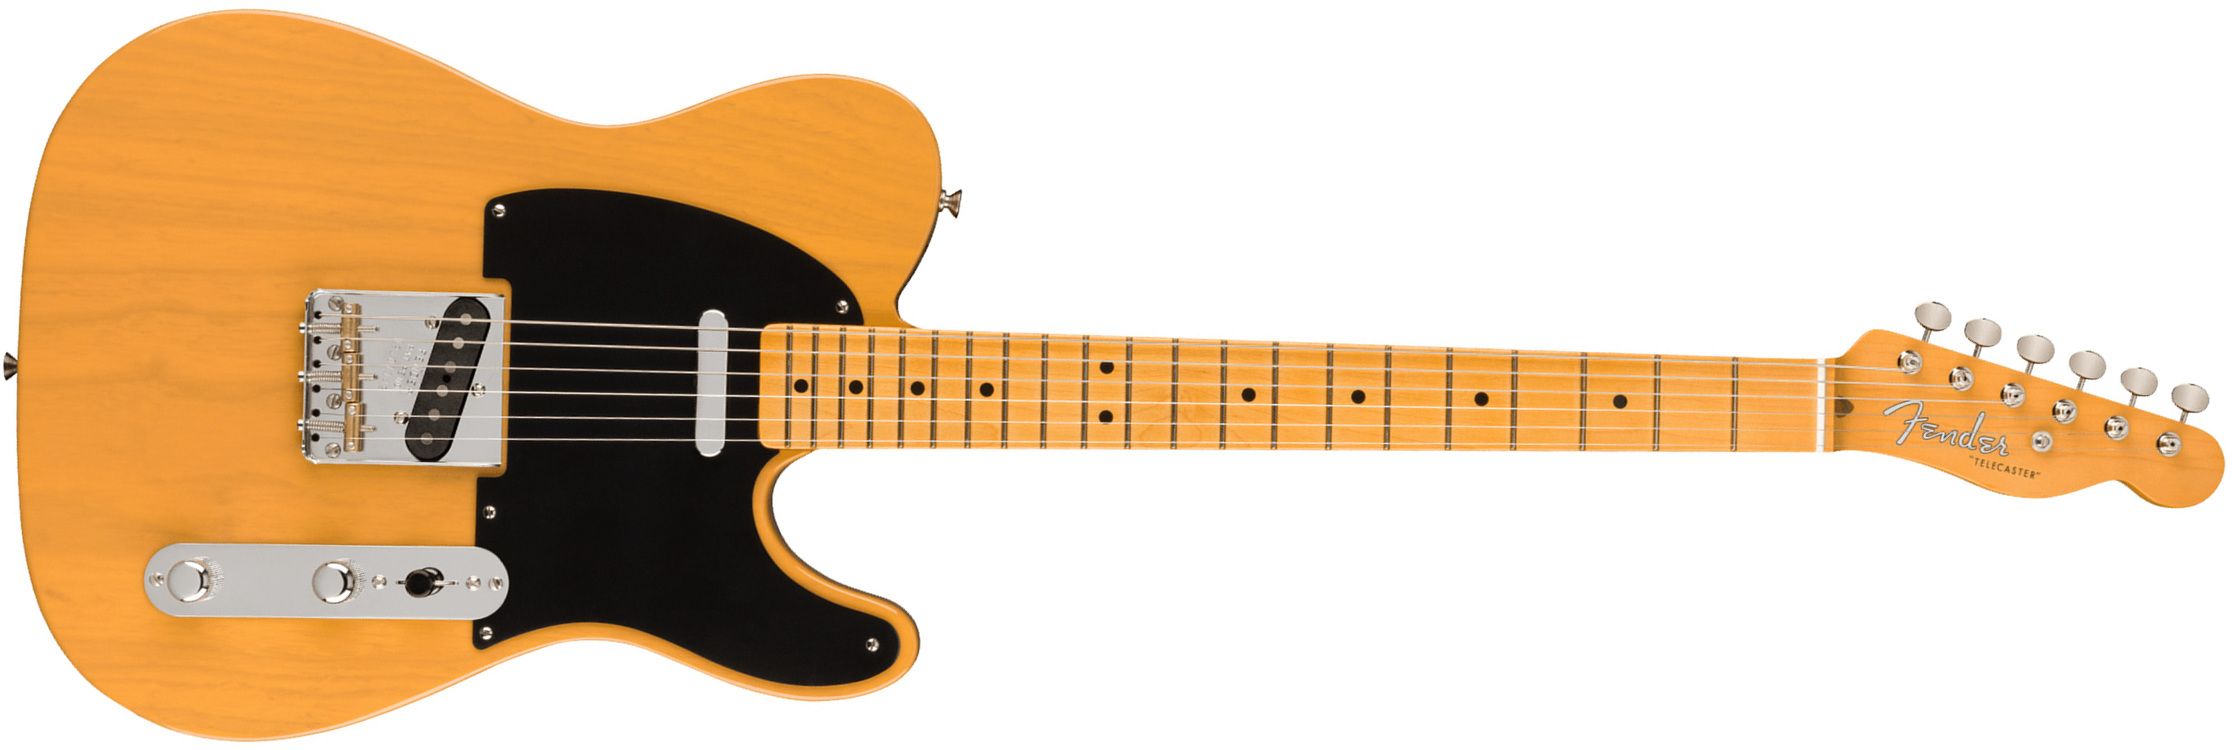 Fender Tele 1951 American Vintage Ii Usa 2s Ht Mn - Butterscotch Blonde - Guitarra eléctrica con forma de tel - Main picture